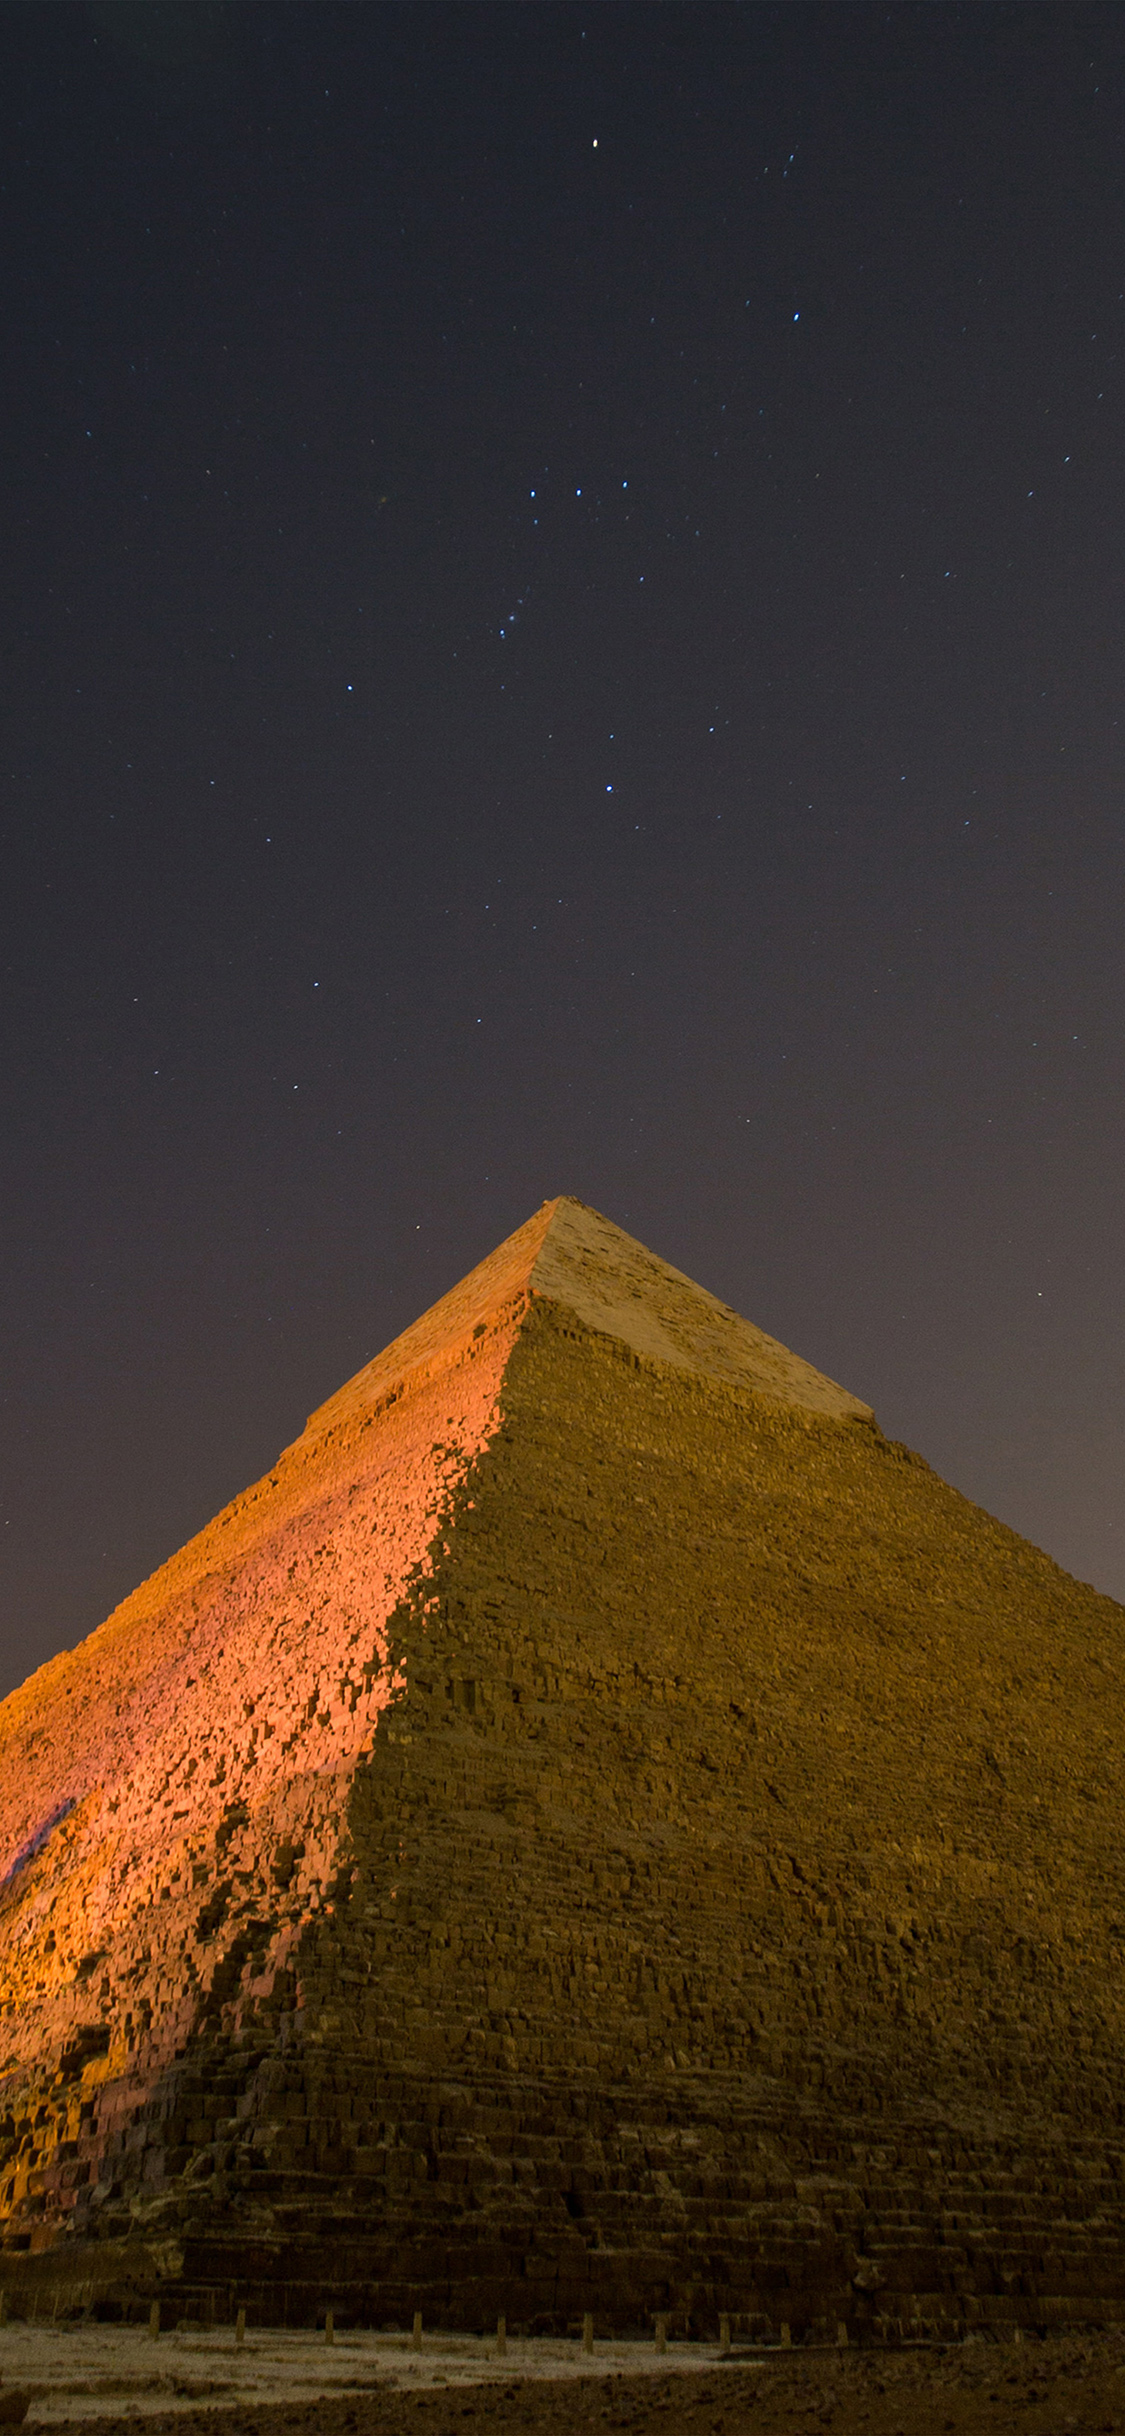 iPhone X wallpaper. pyramid dark sky nature